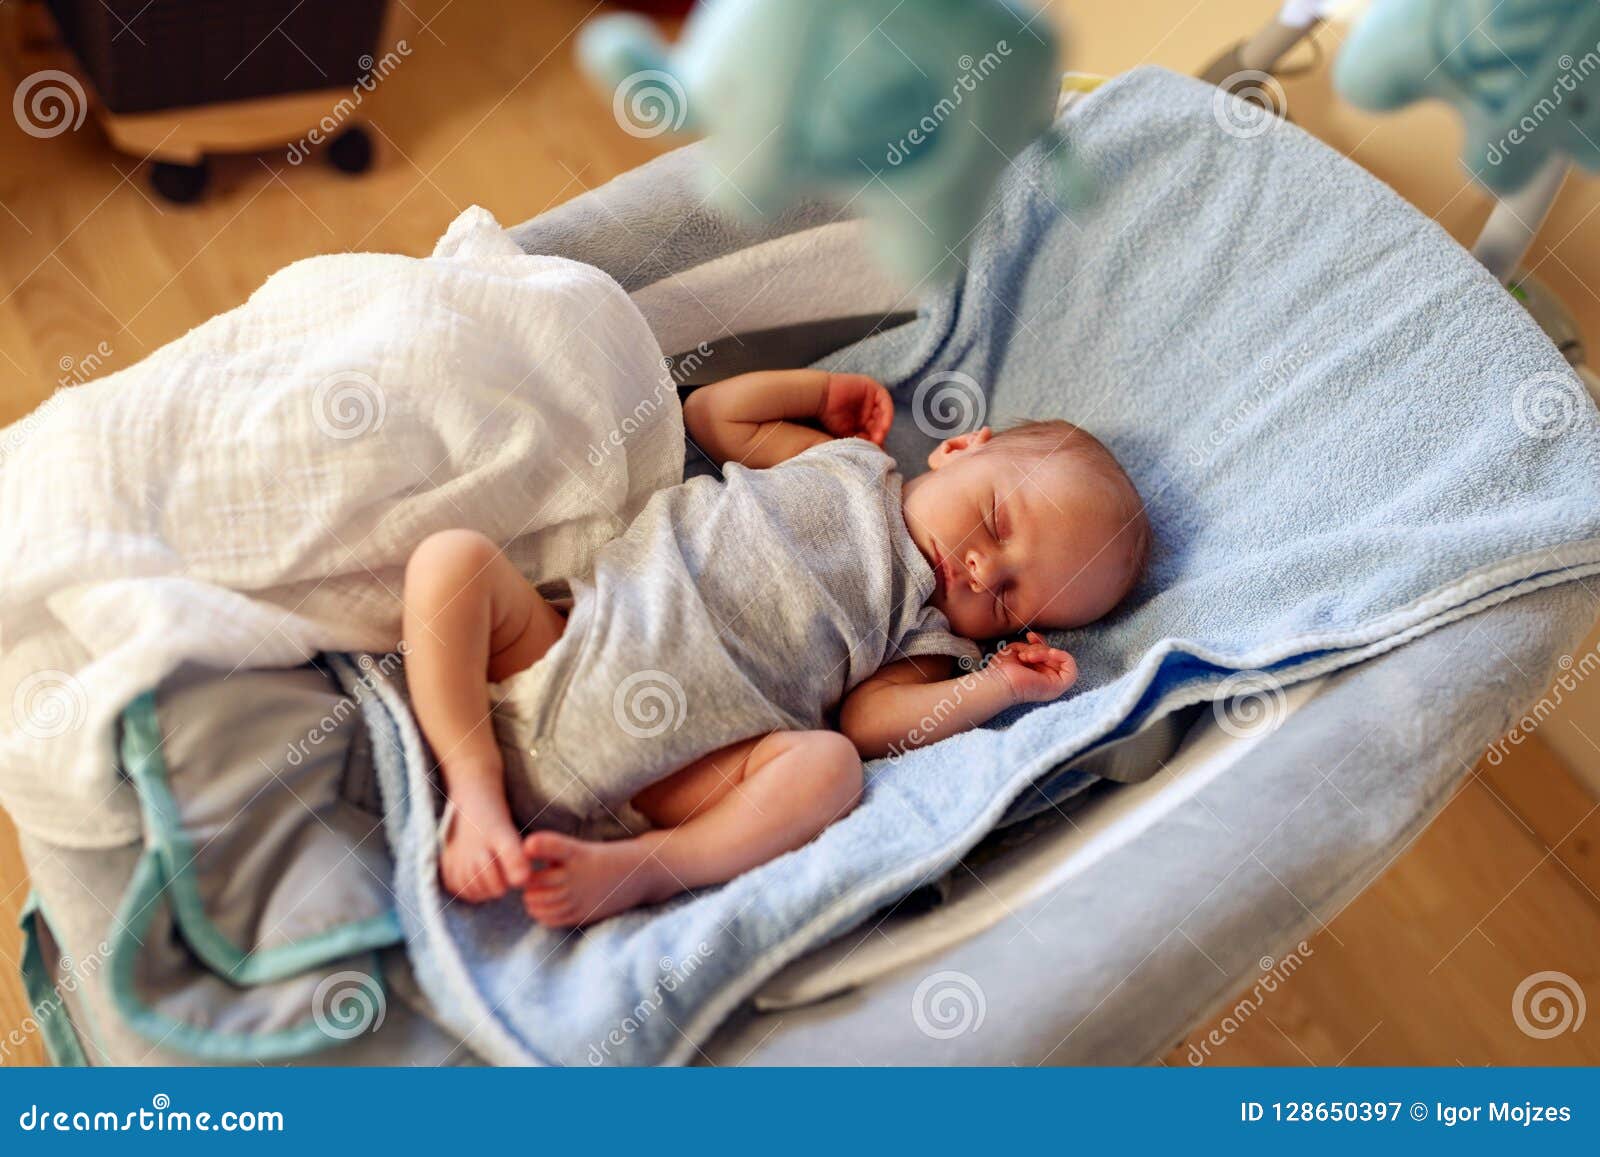 newborn sleeping in bouncer